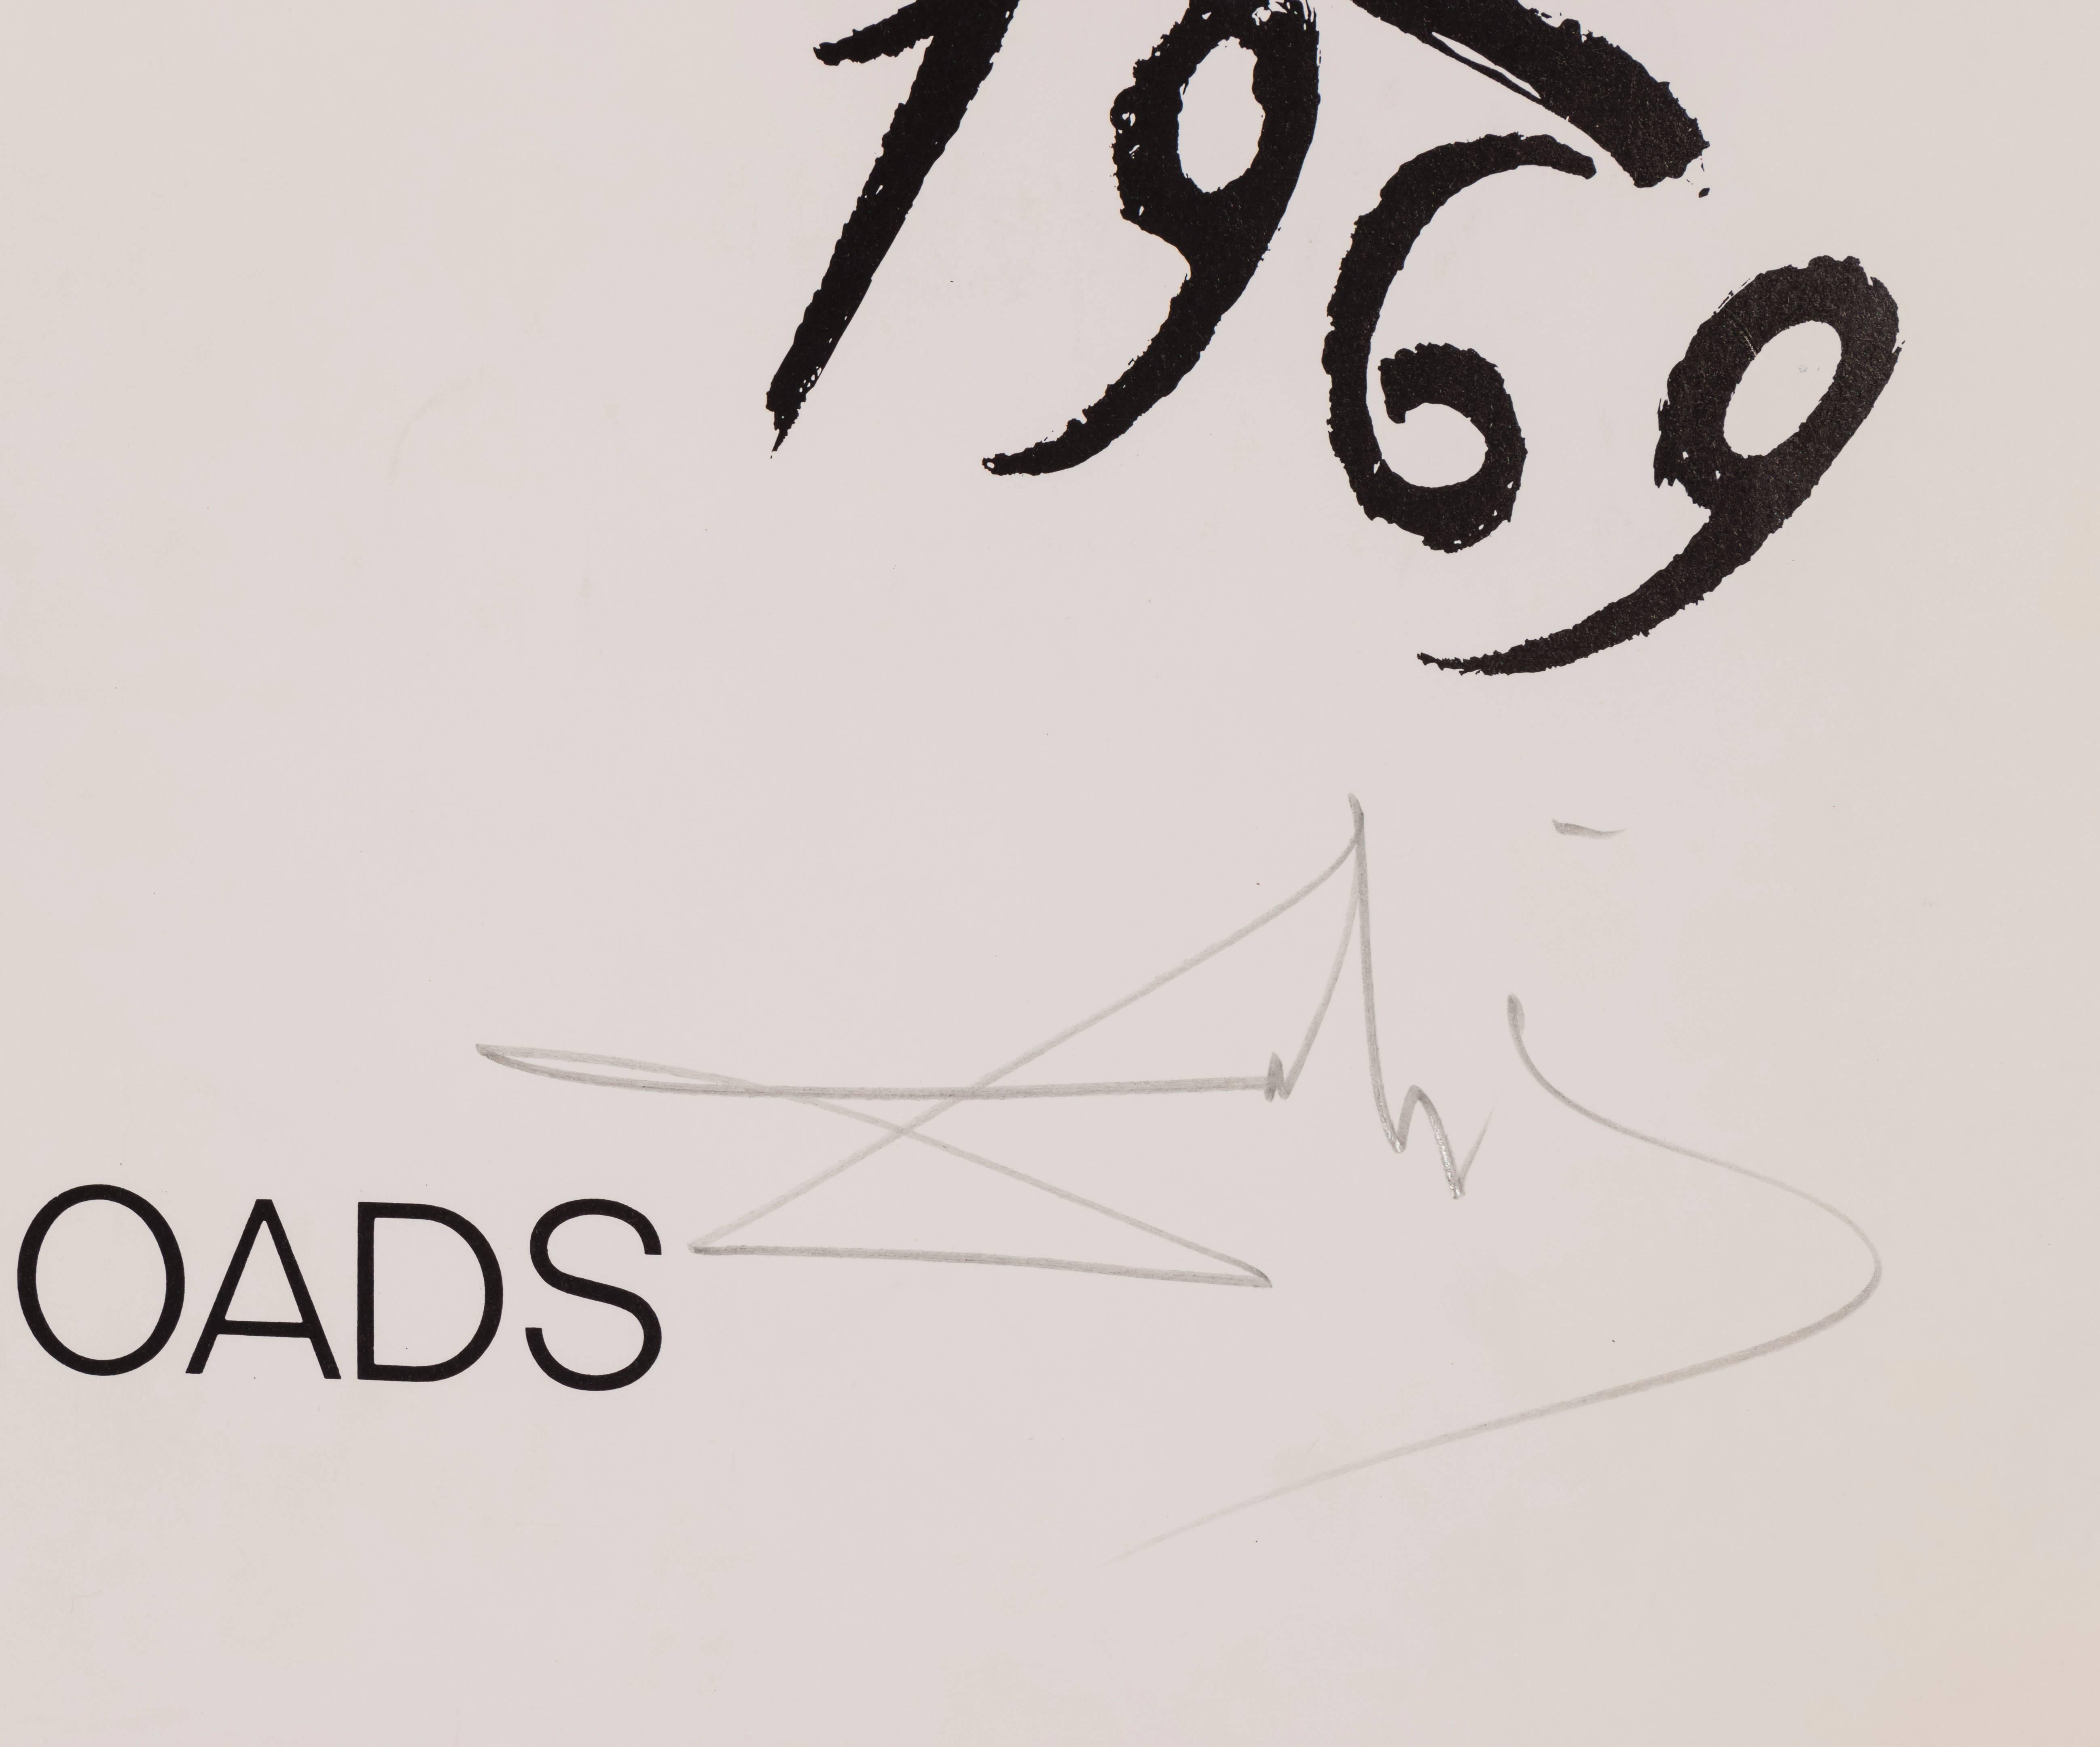 Dali signed Alpes FRENCH NATIONAL RAILROADS poster - Print by Salvador Dalí